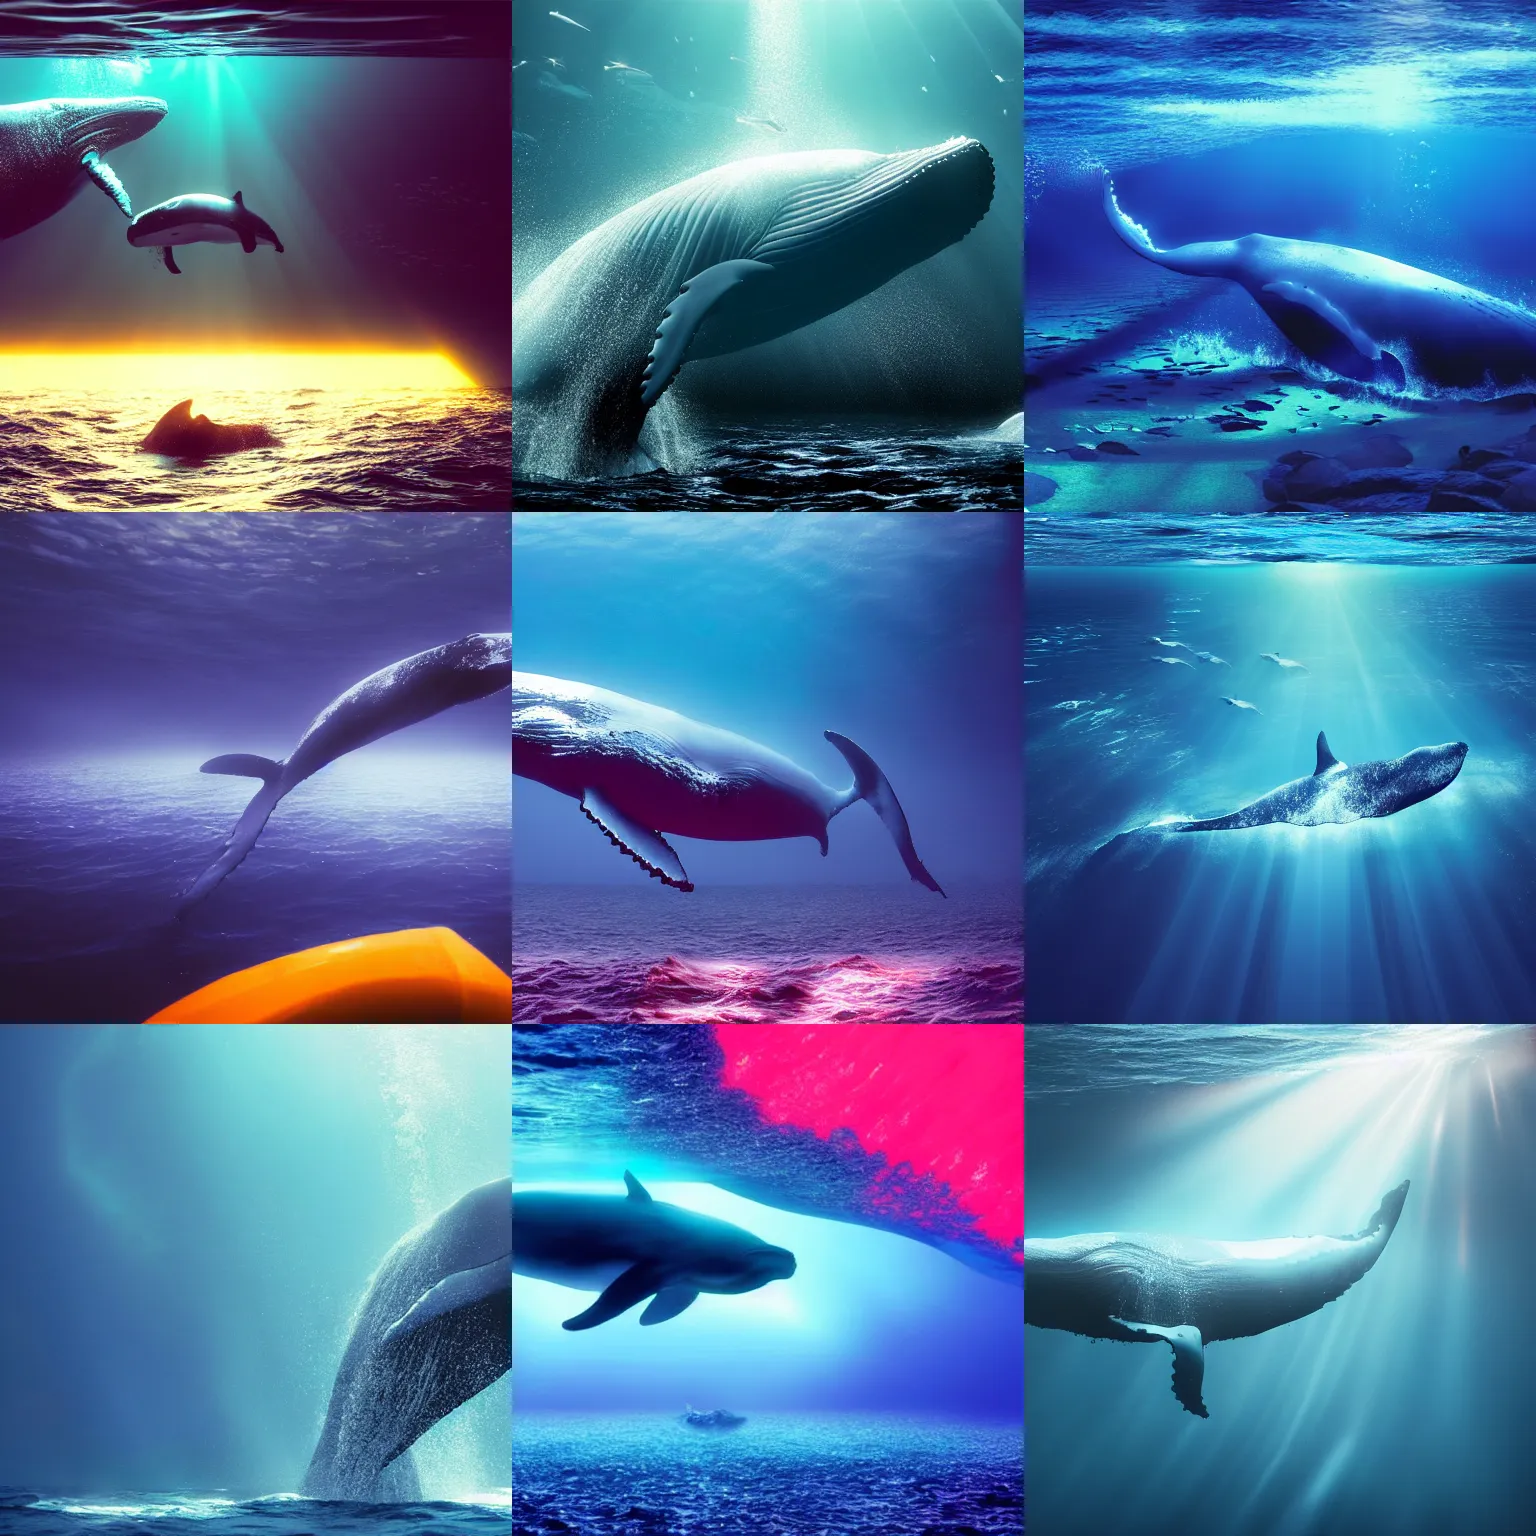 Prompt: a huge whale with flourescent skin in underwater ocean, epic, cinematic shot, volumetric light, atmosphere